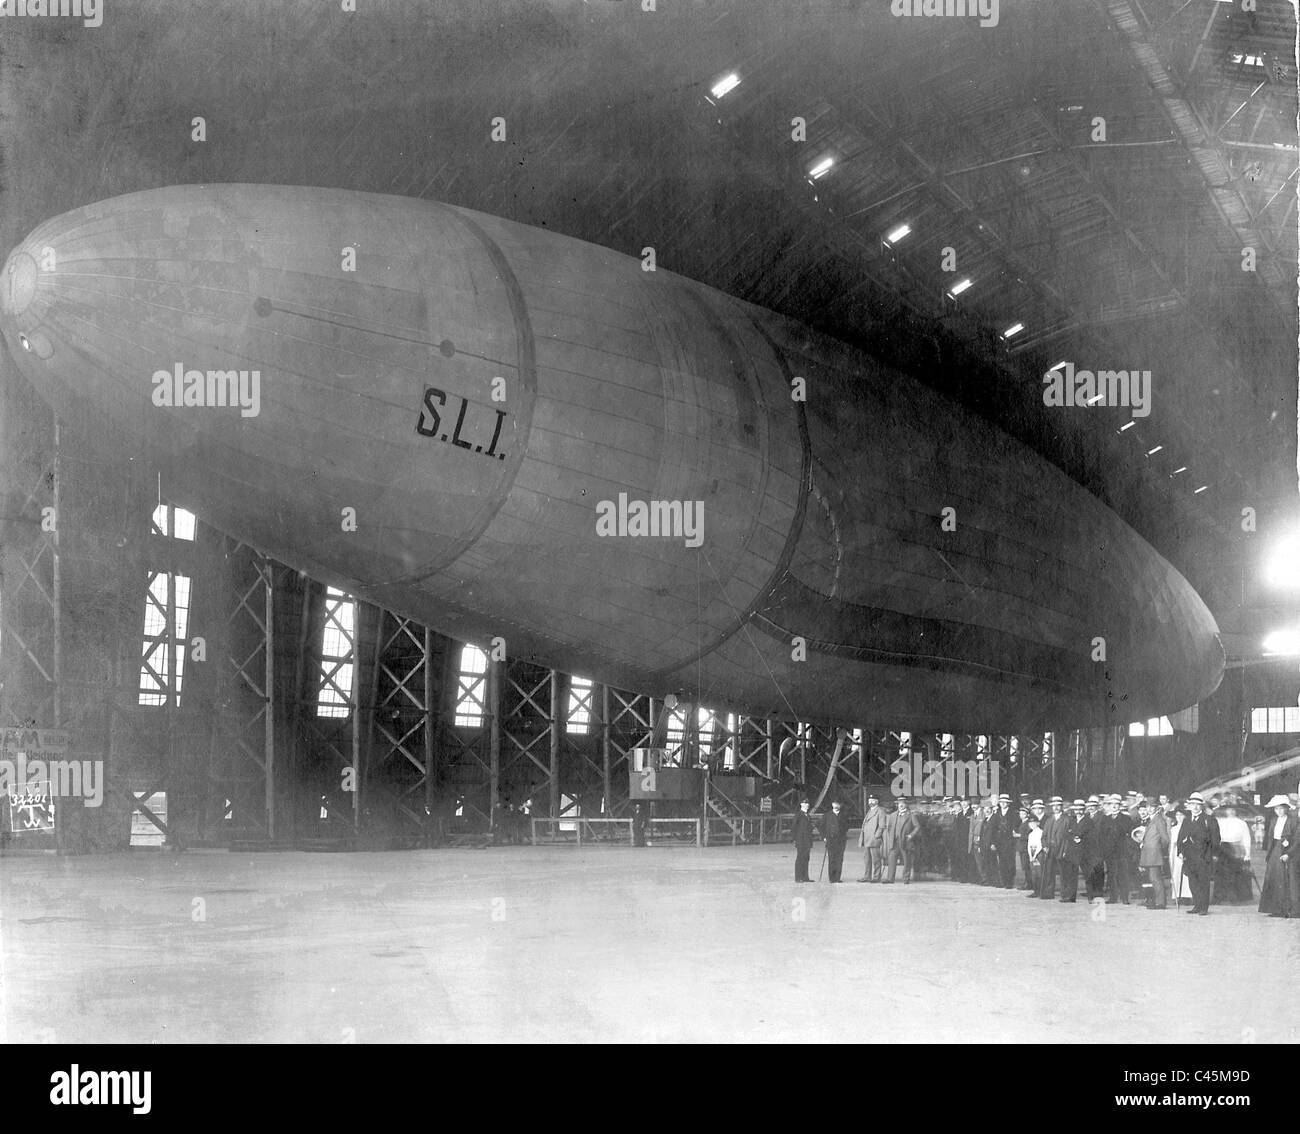 Schuette-Lanz airship 'S.L.I.' in the Mannheim hangar, 1912 Stock Photo